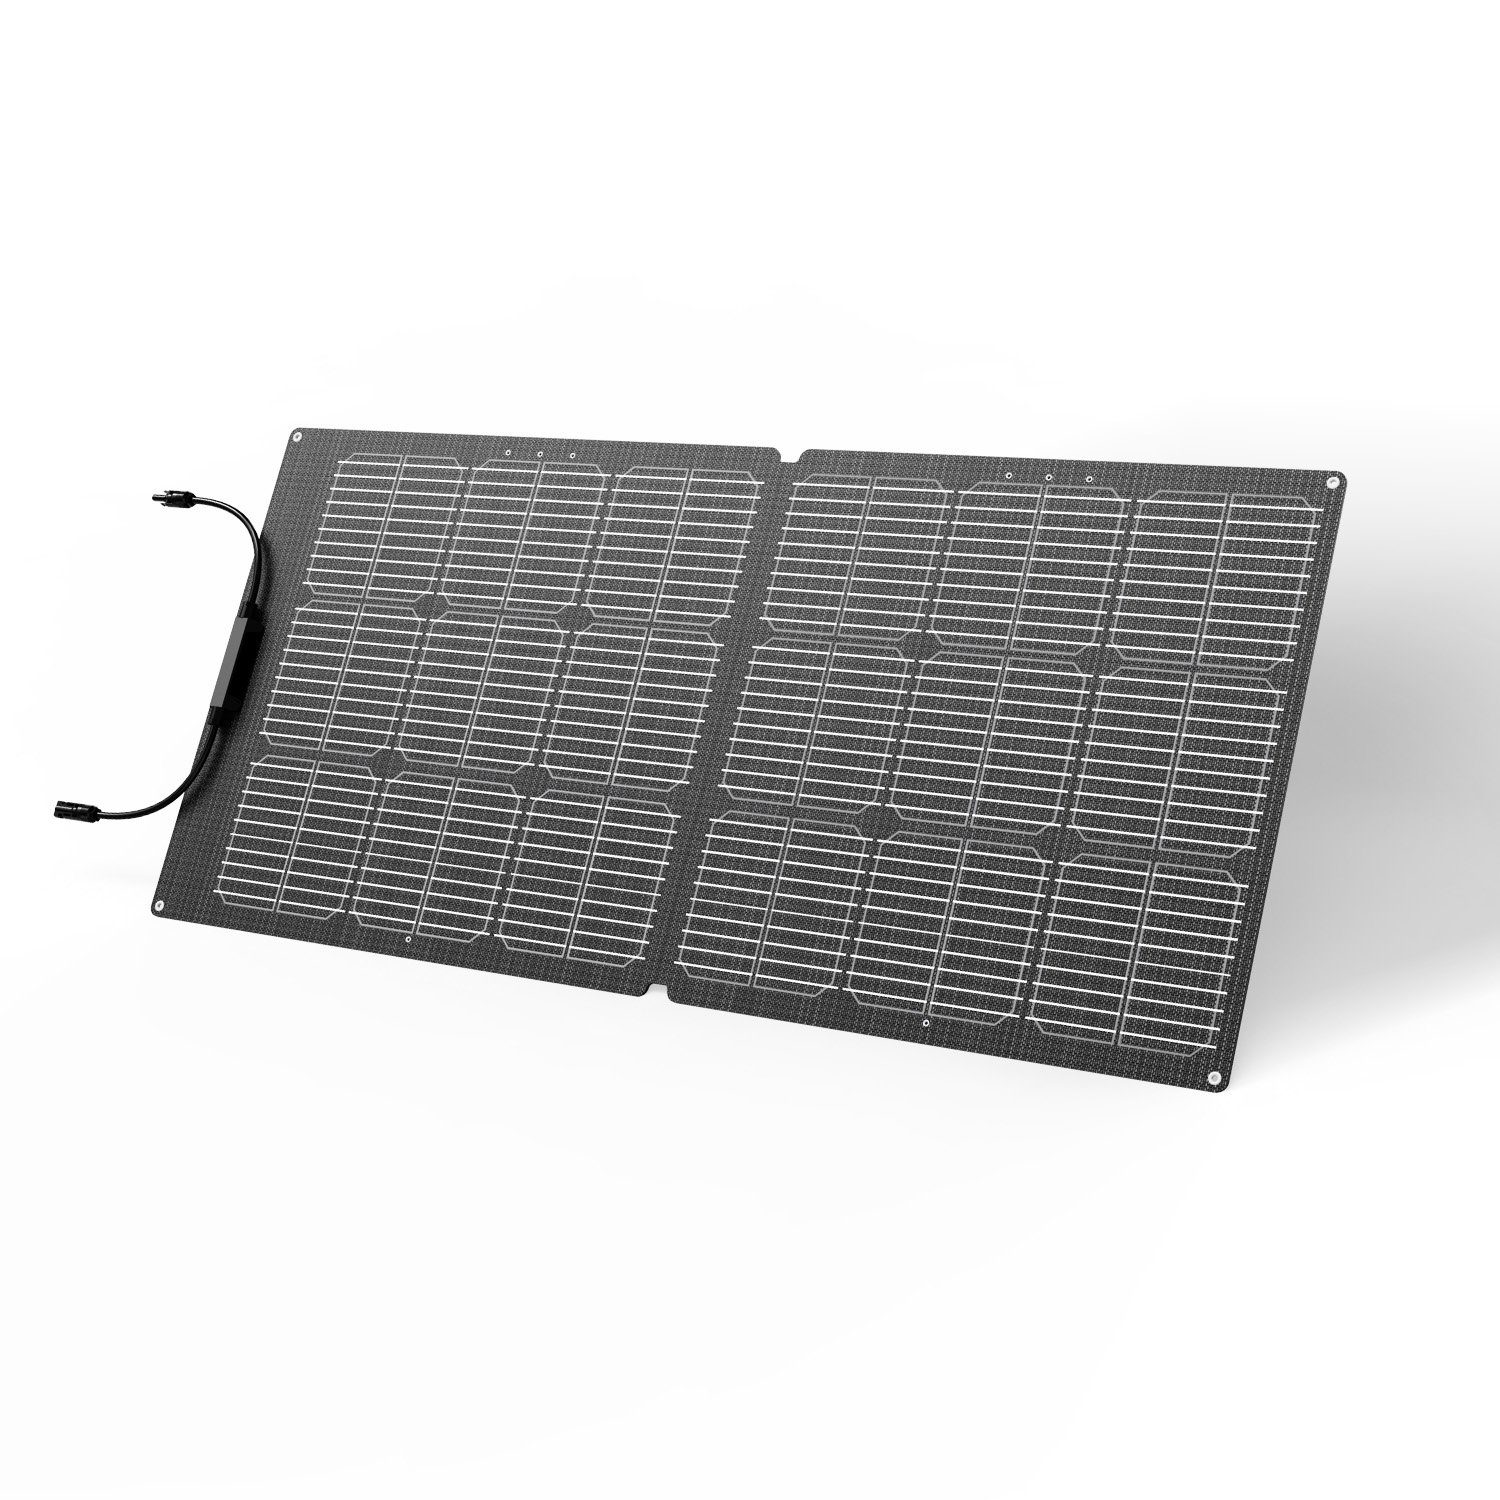 PowerStation Balkonkraftwerk 100/200W für faltbar Flexible Solaranlage FULLSENT, CITYSPORTS 100W Solarmodul